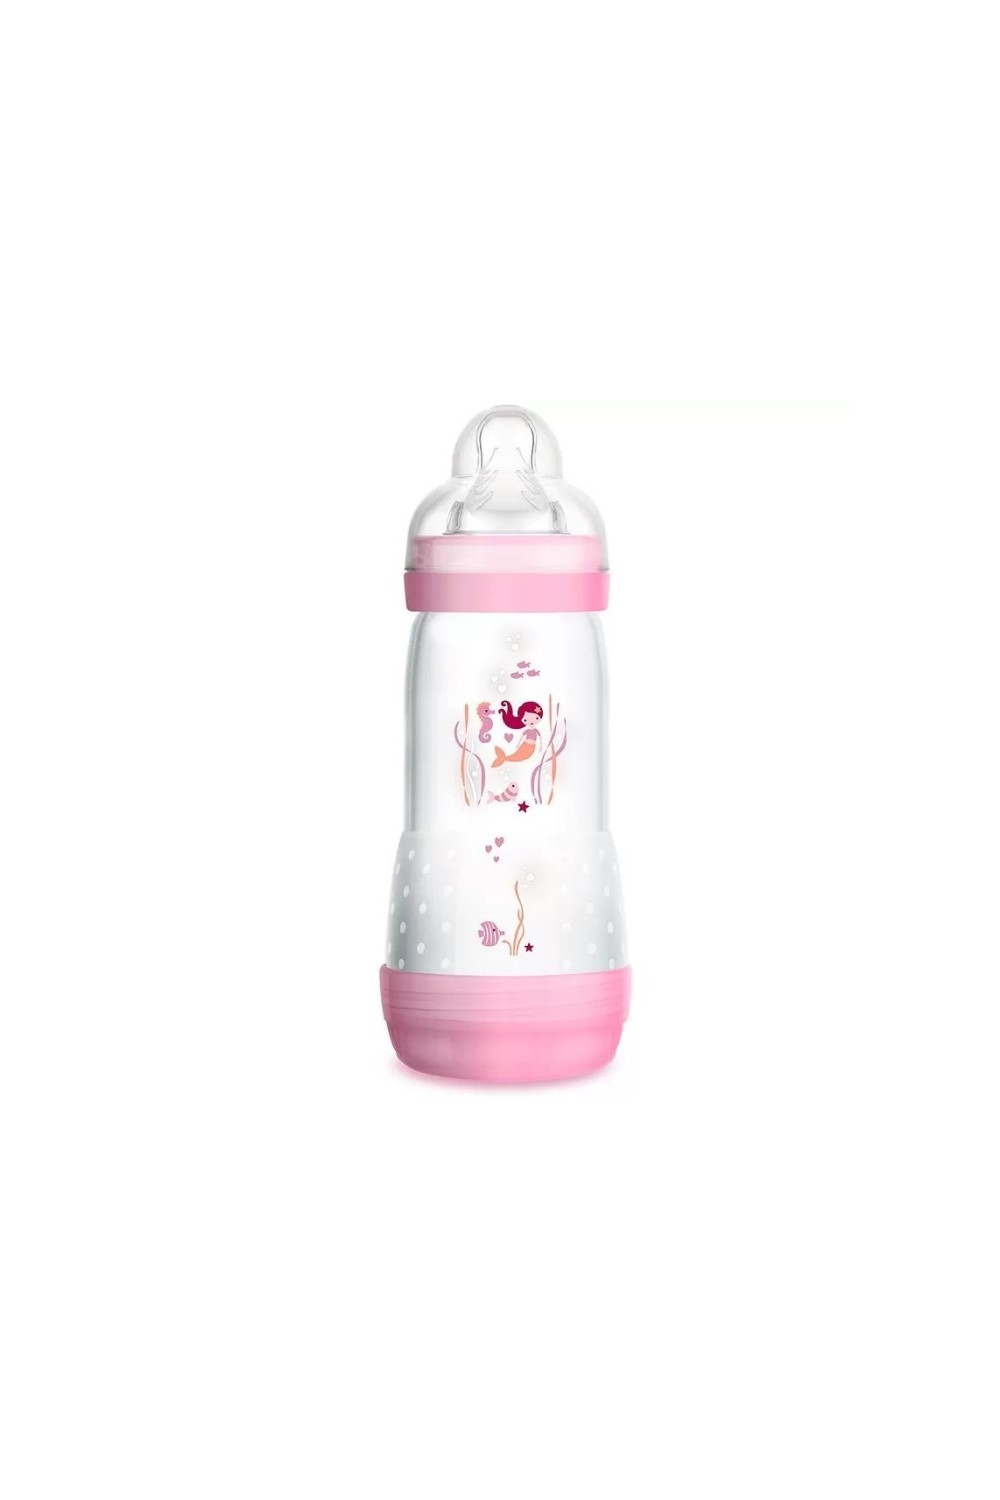 Mam Baby Anti Colic Bottle Pink 320ml